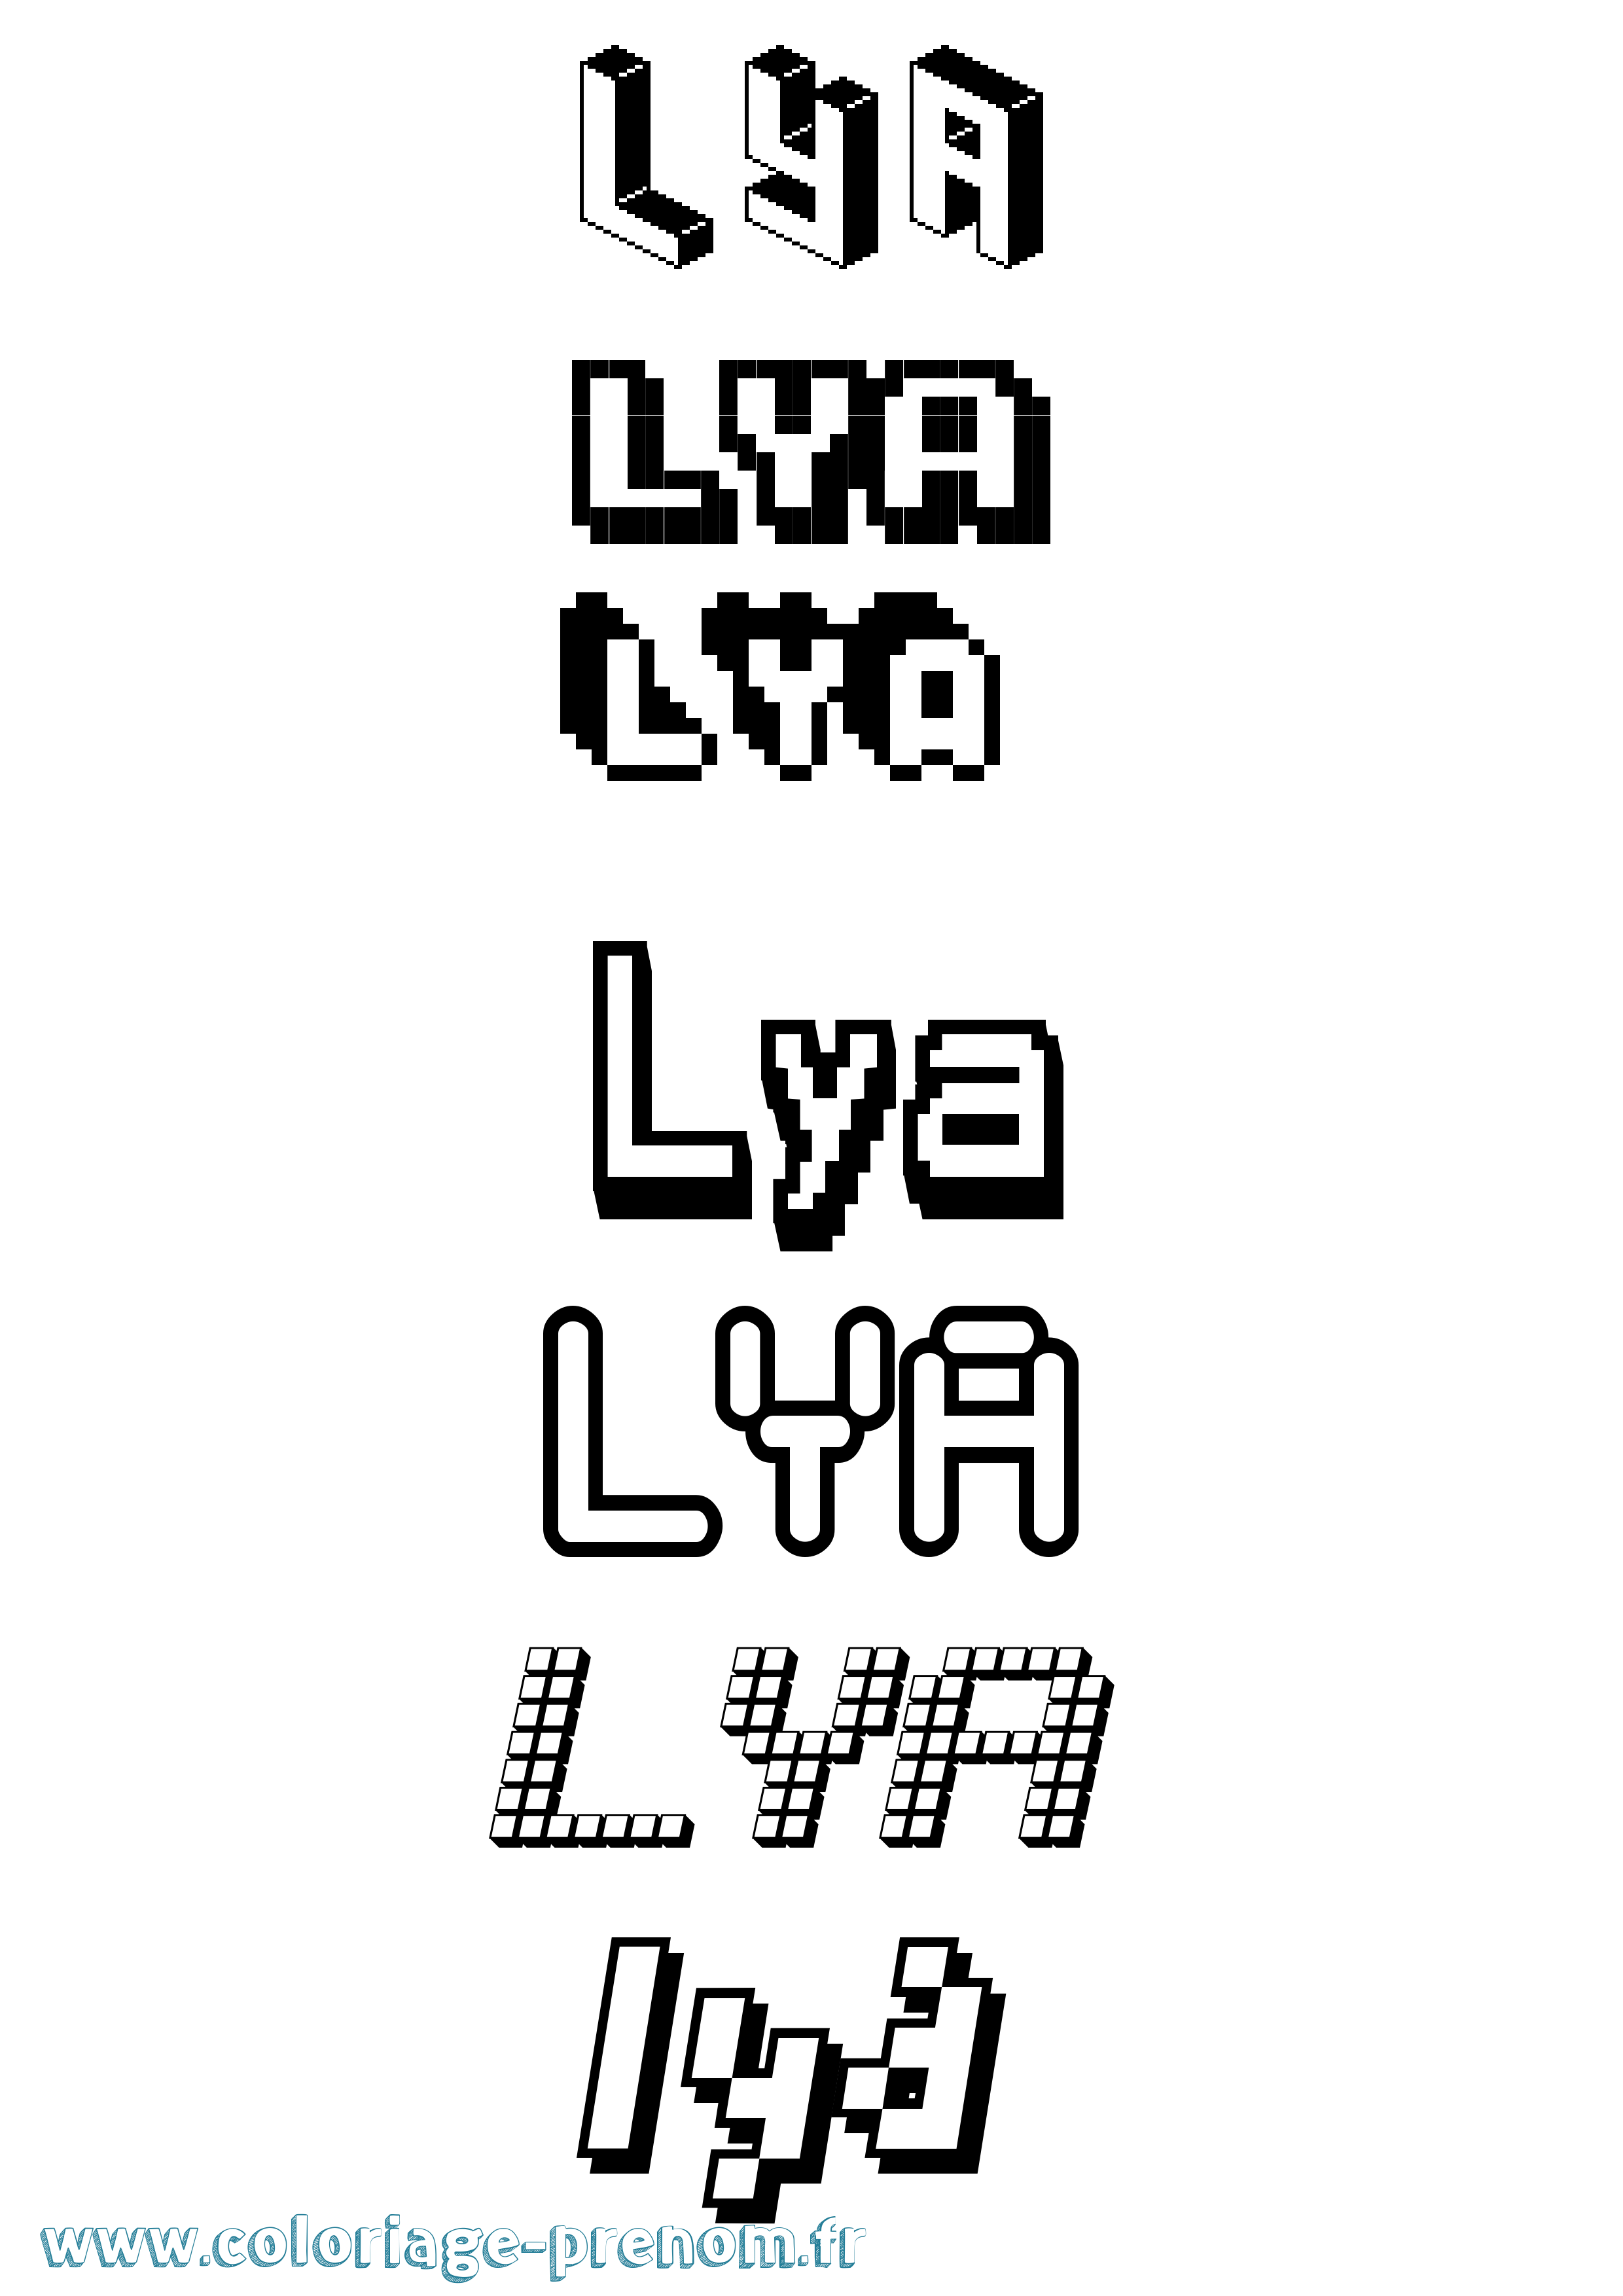 Coloriage prénom Lya Pixel